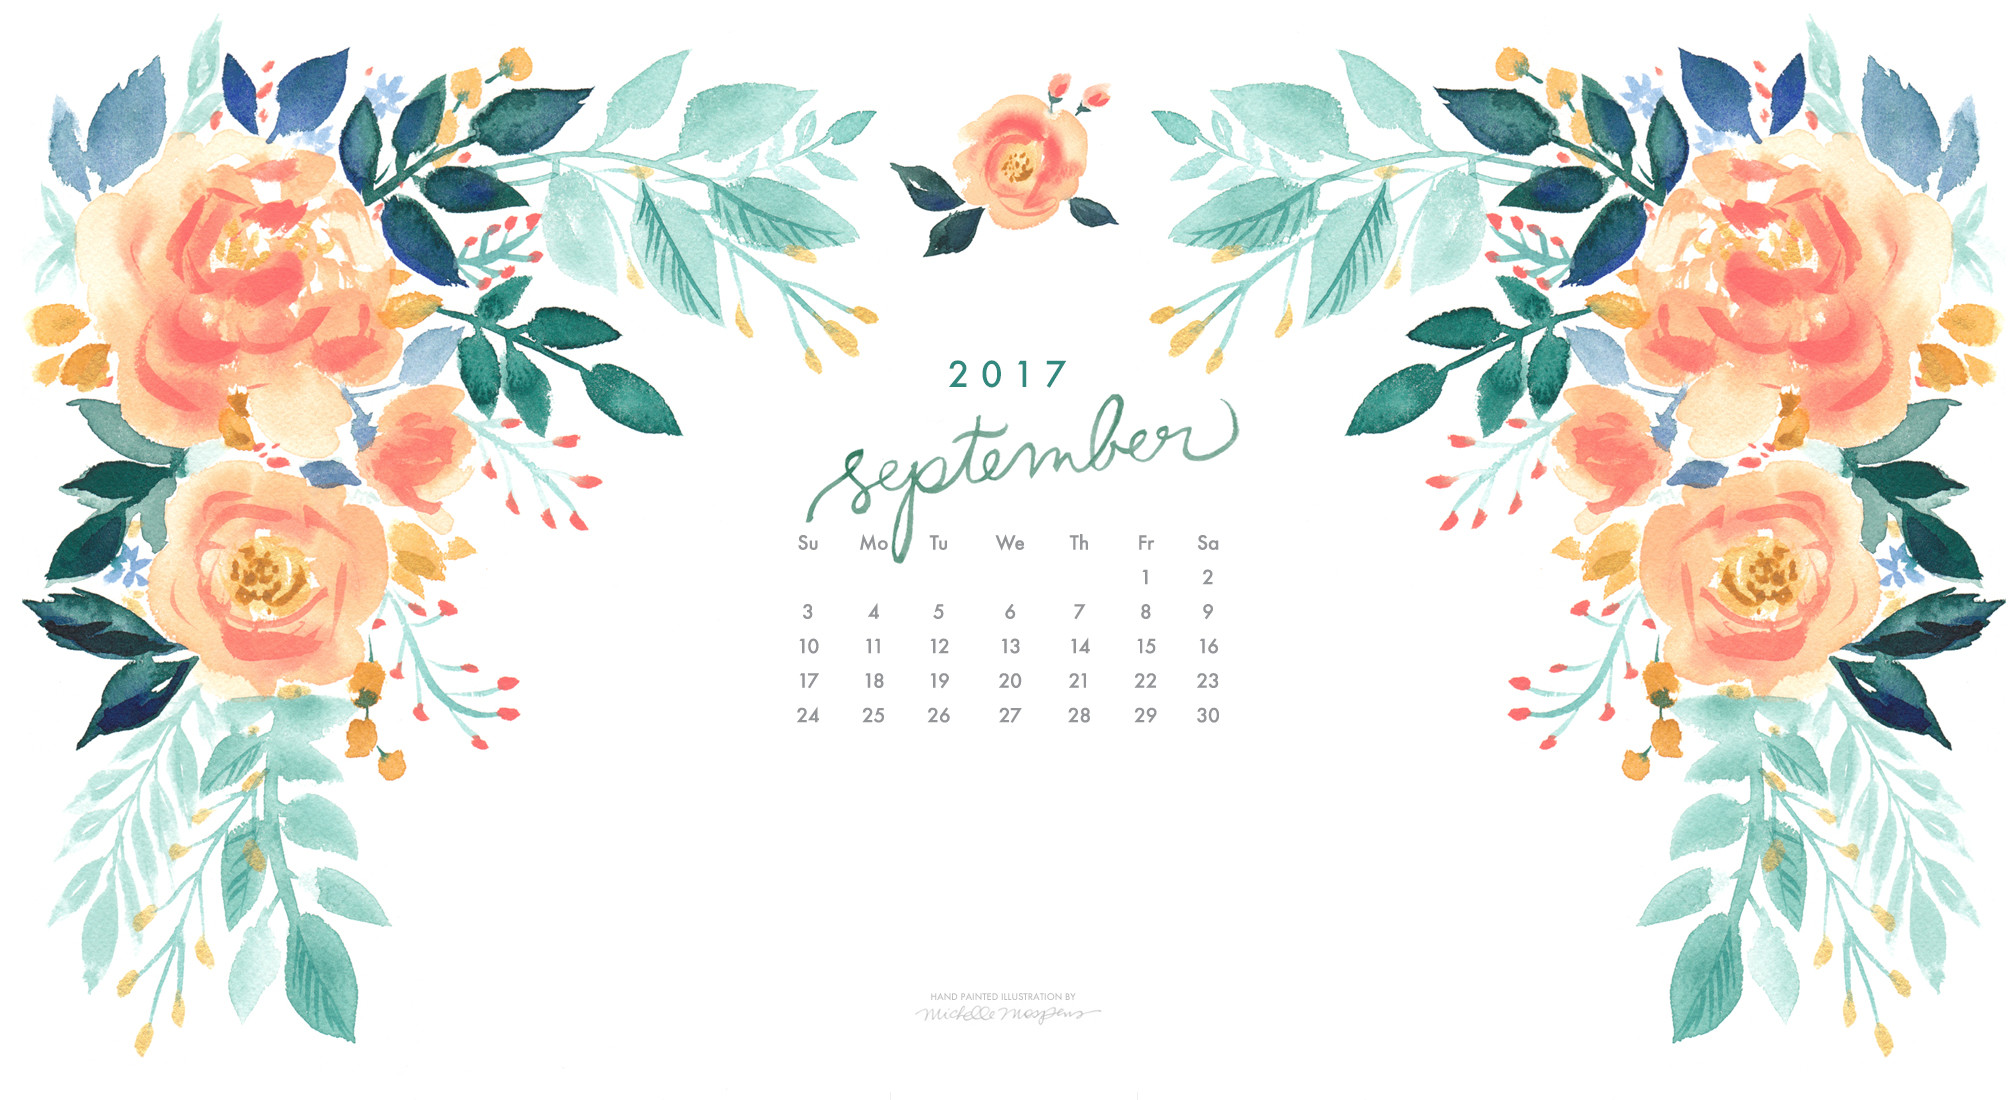 Pretty peach blooms watercolor September 2017 calendar wallpaper for your computer. 100 original art